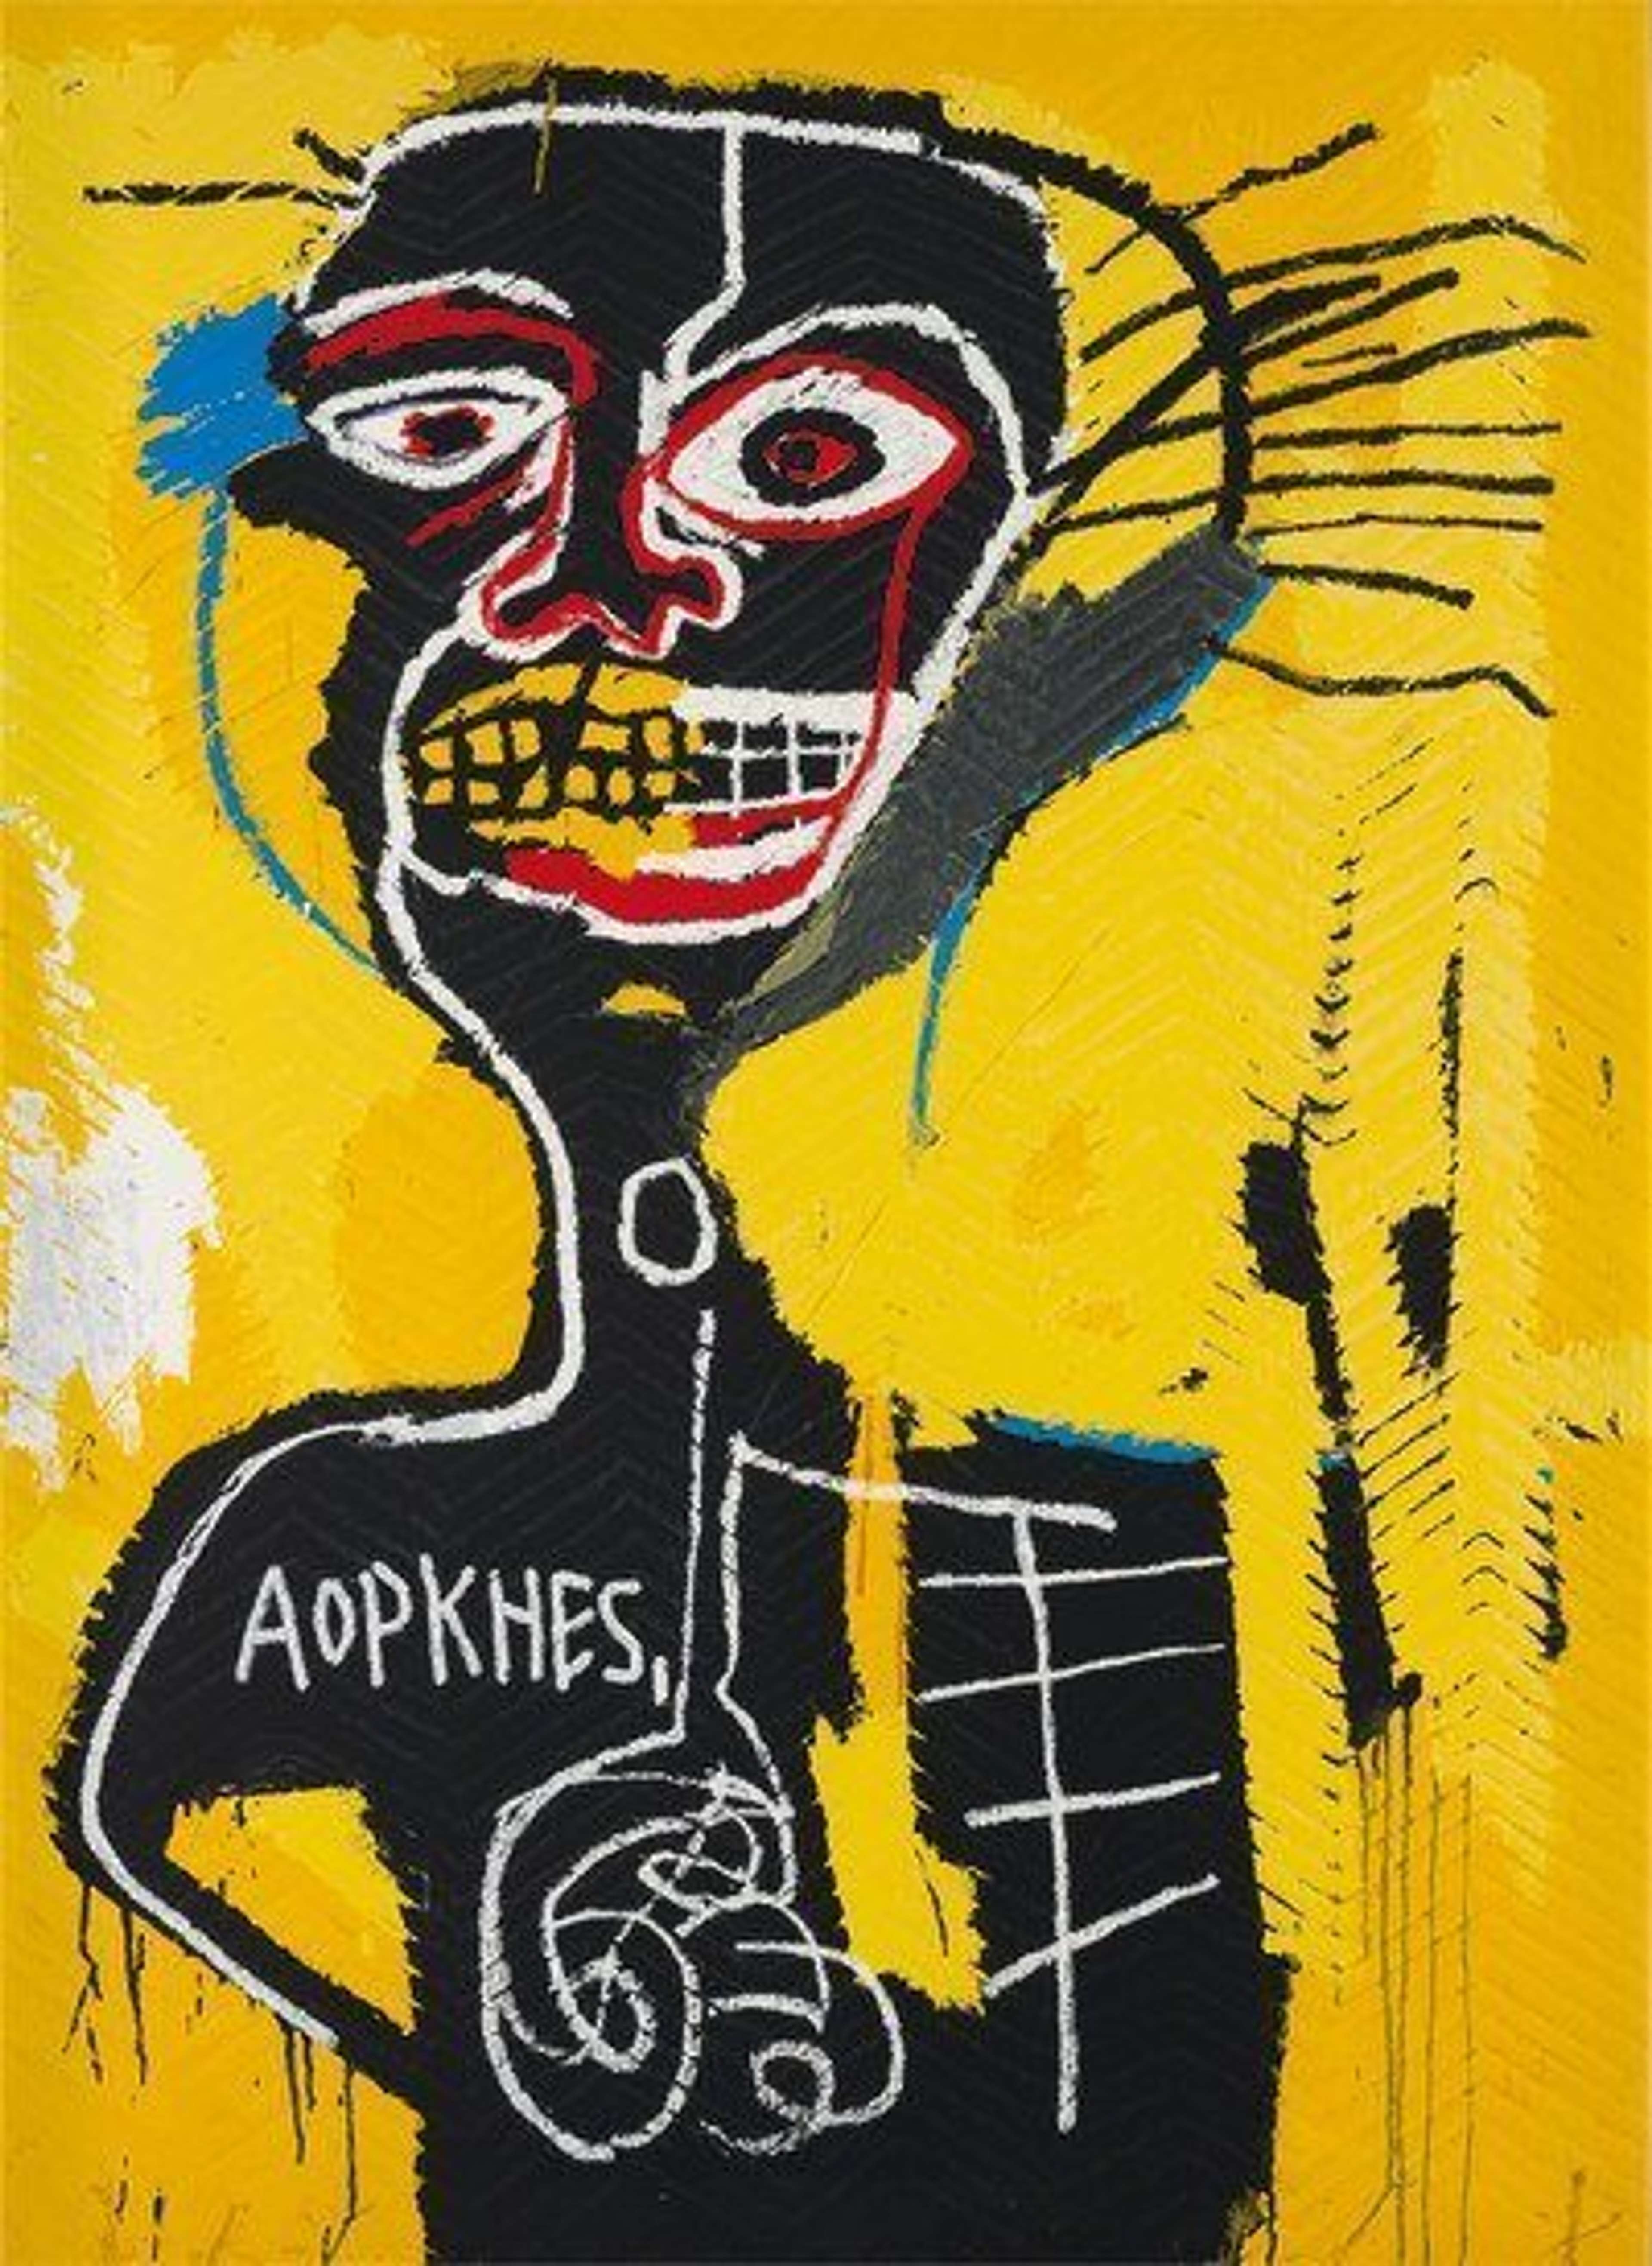 Cabeza by Jean-Michel Basquiat